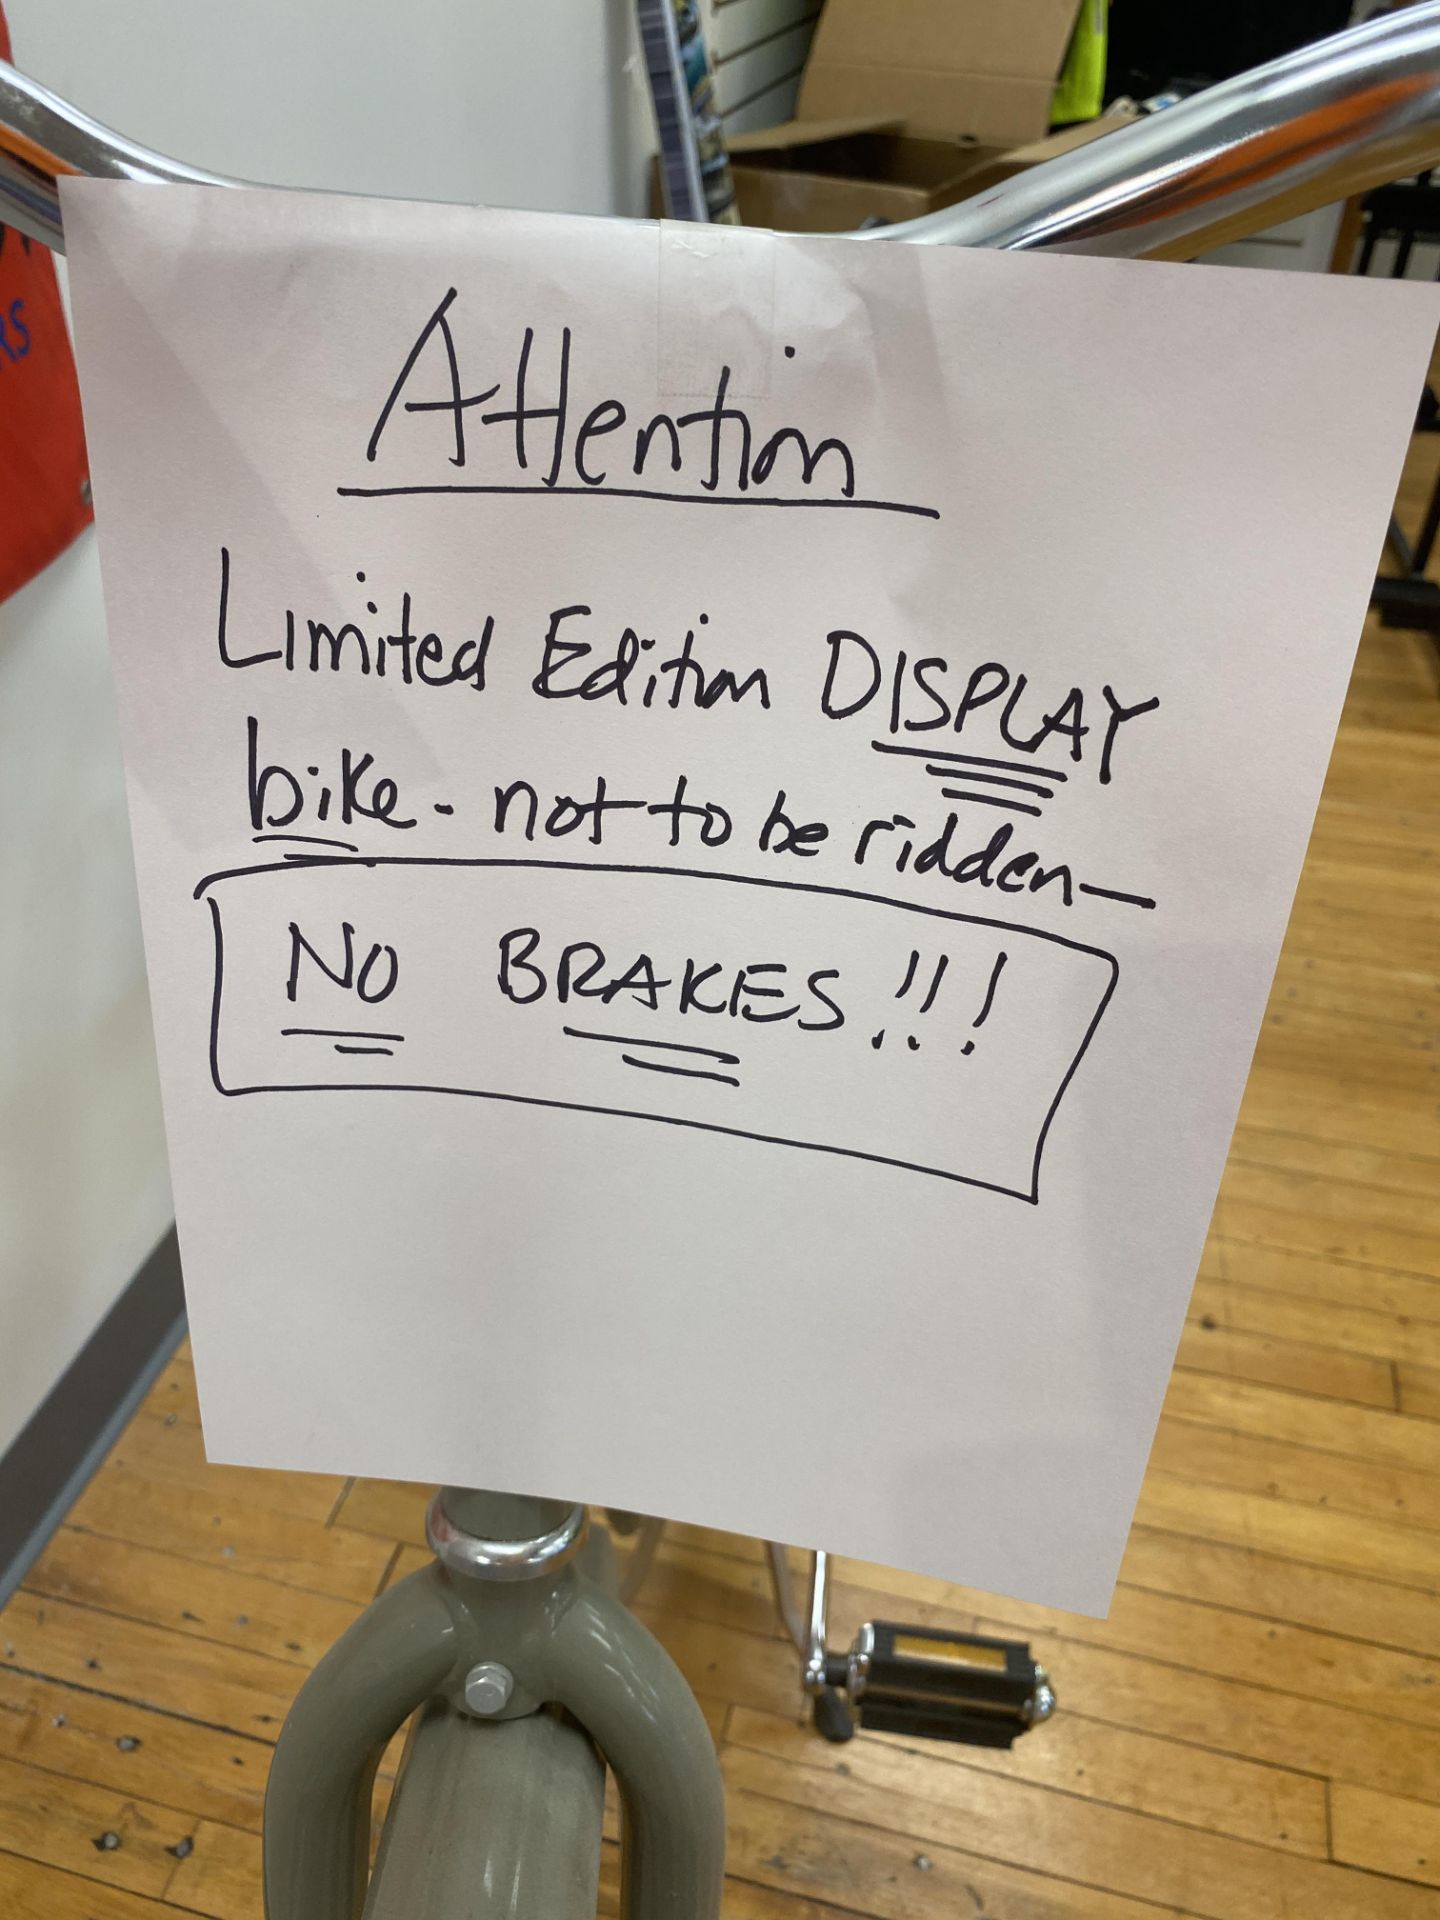 Brooks Limited Edition Display bike (No Brakes) - Image 3 of 3